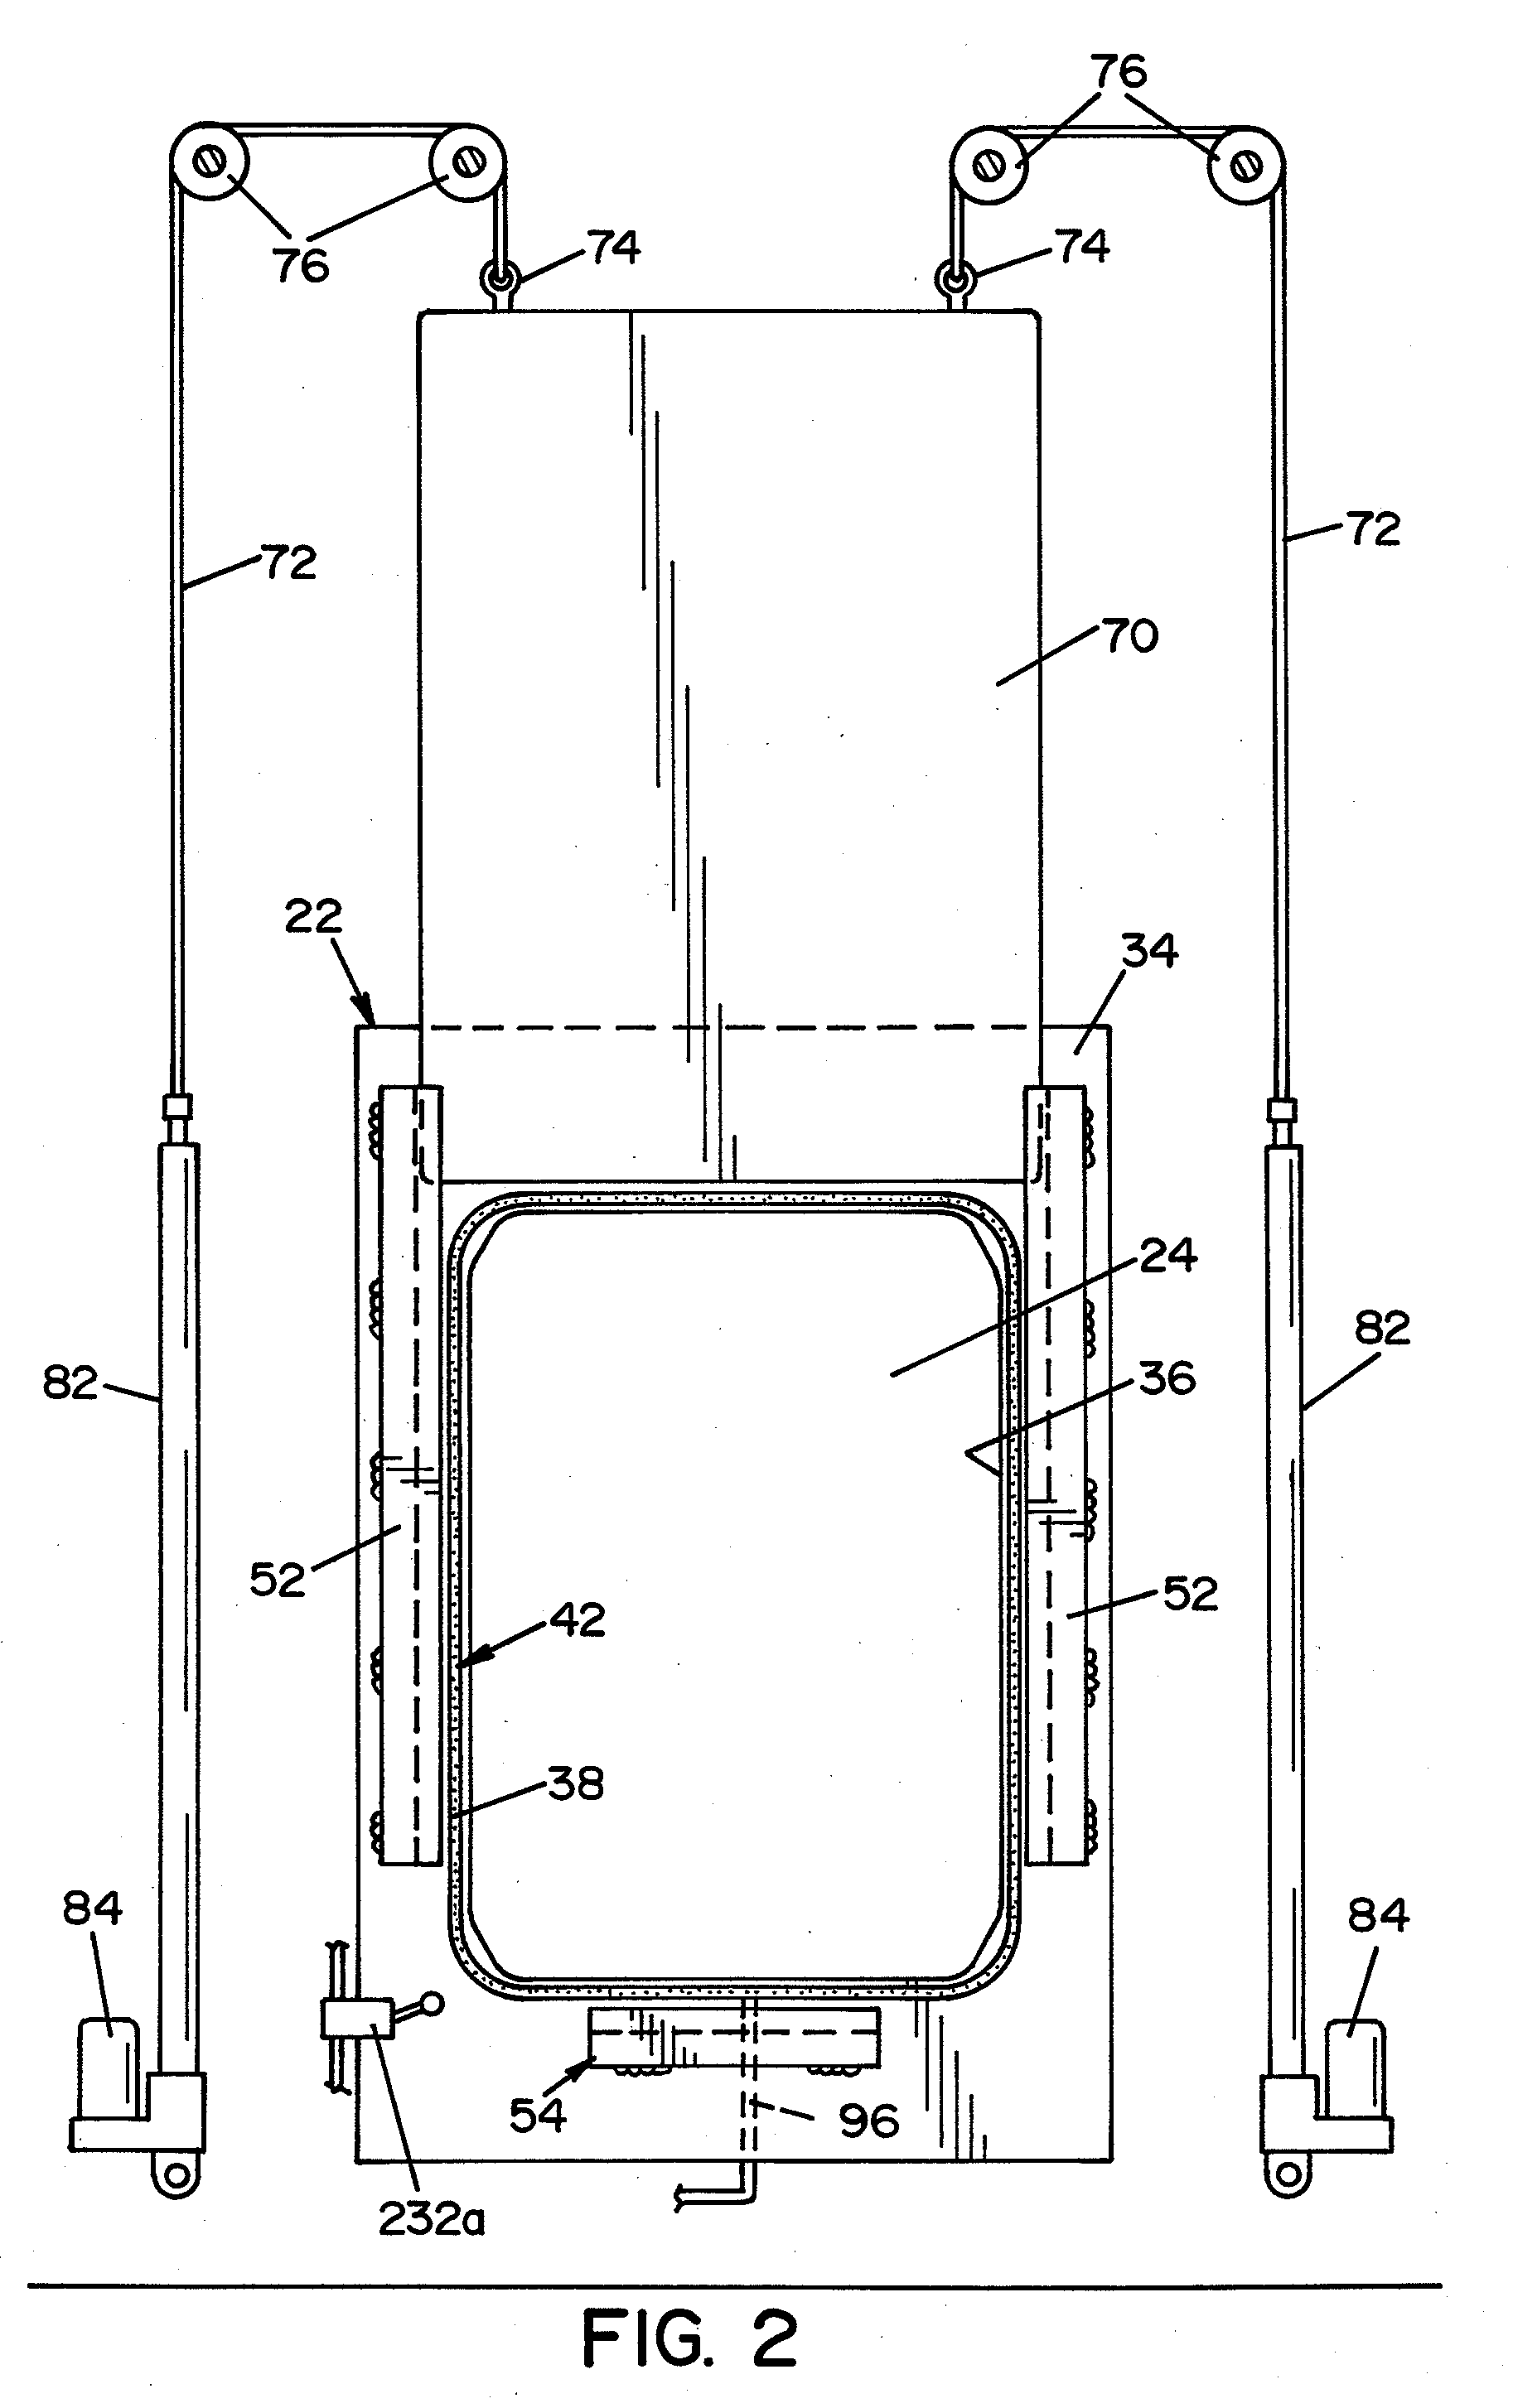 Door seal system for steam sterilizer